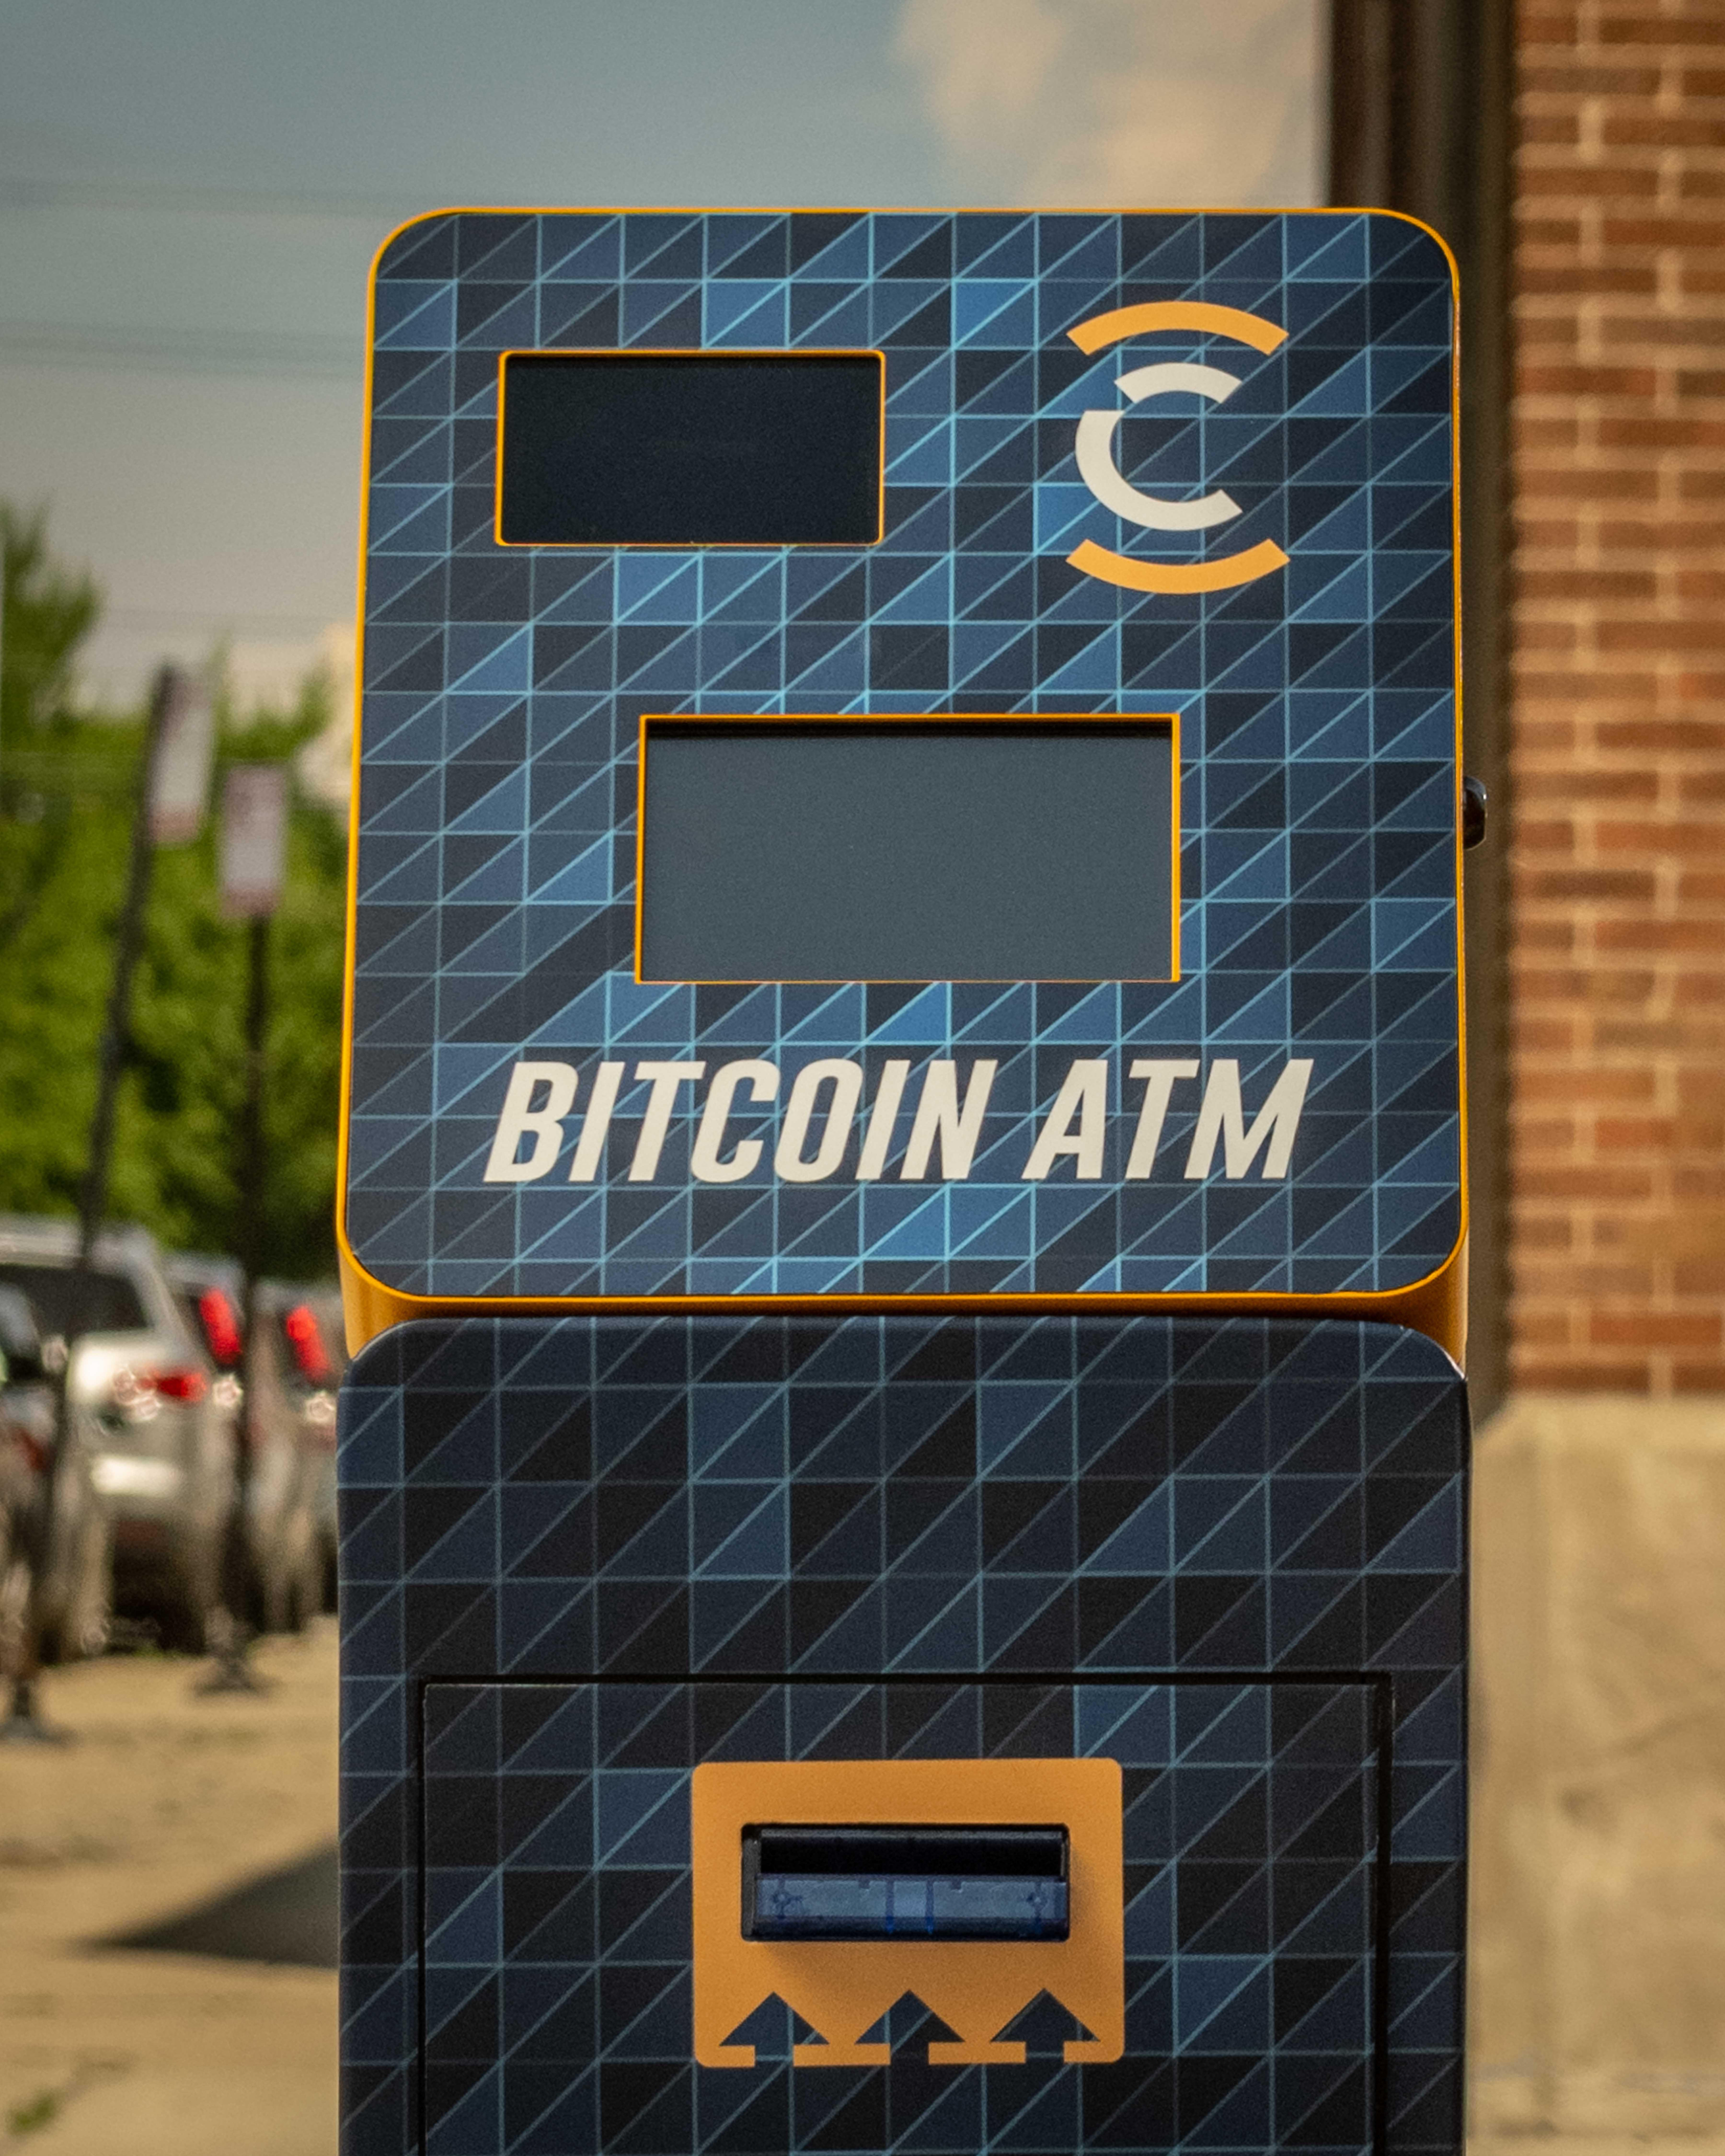 Cardtronics ATM